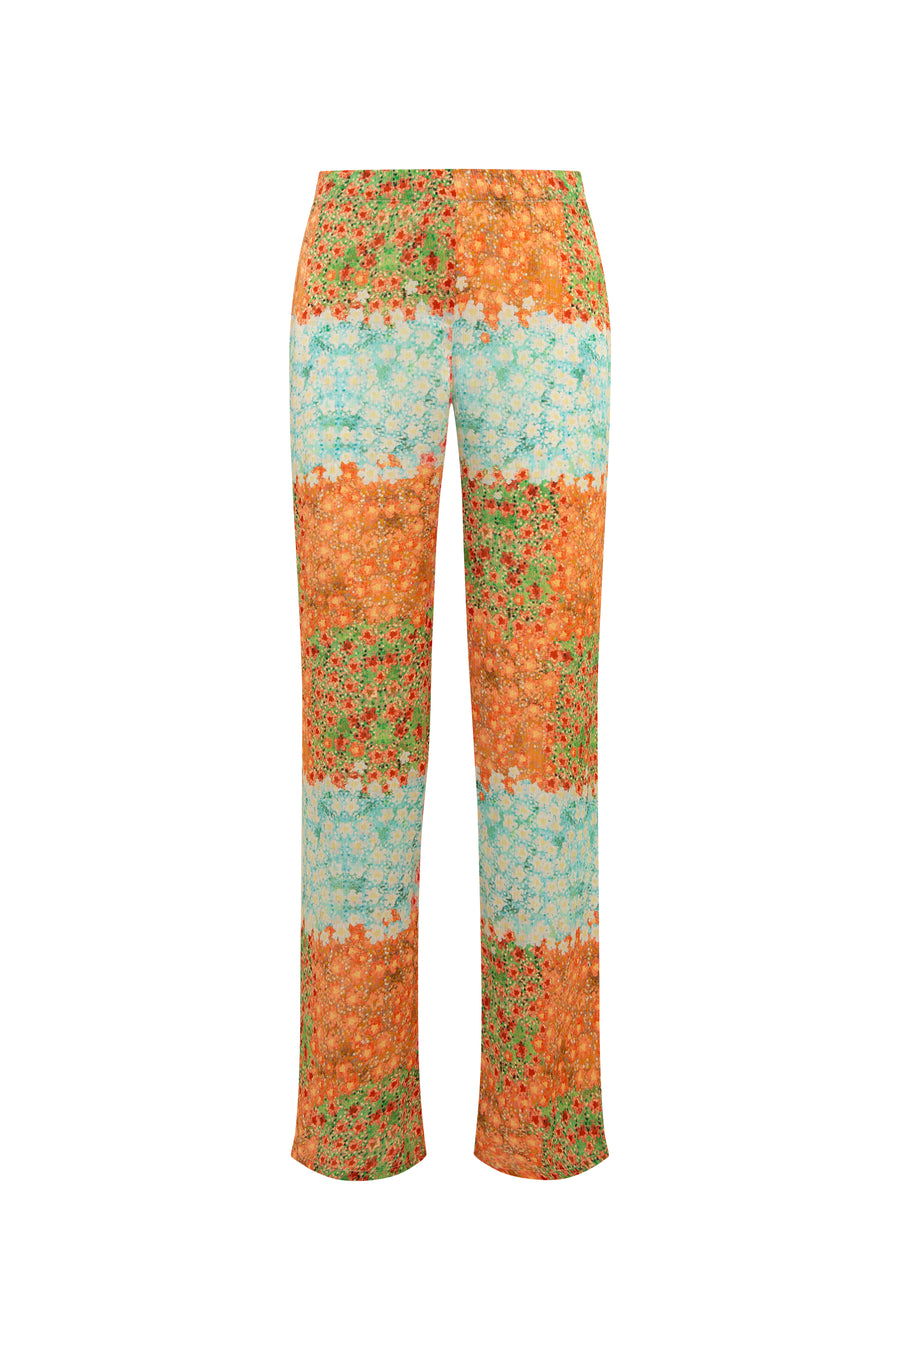 SOLE - Floral printed wide-leg crinkled pants